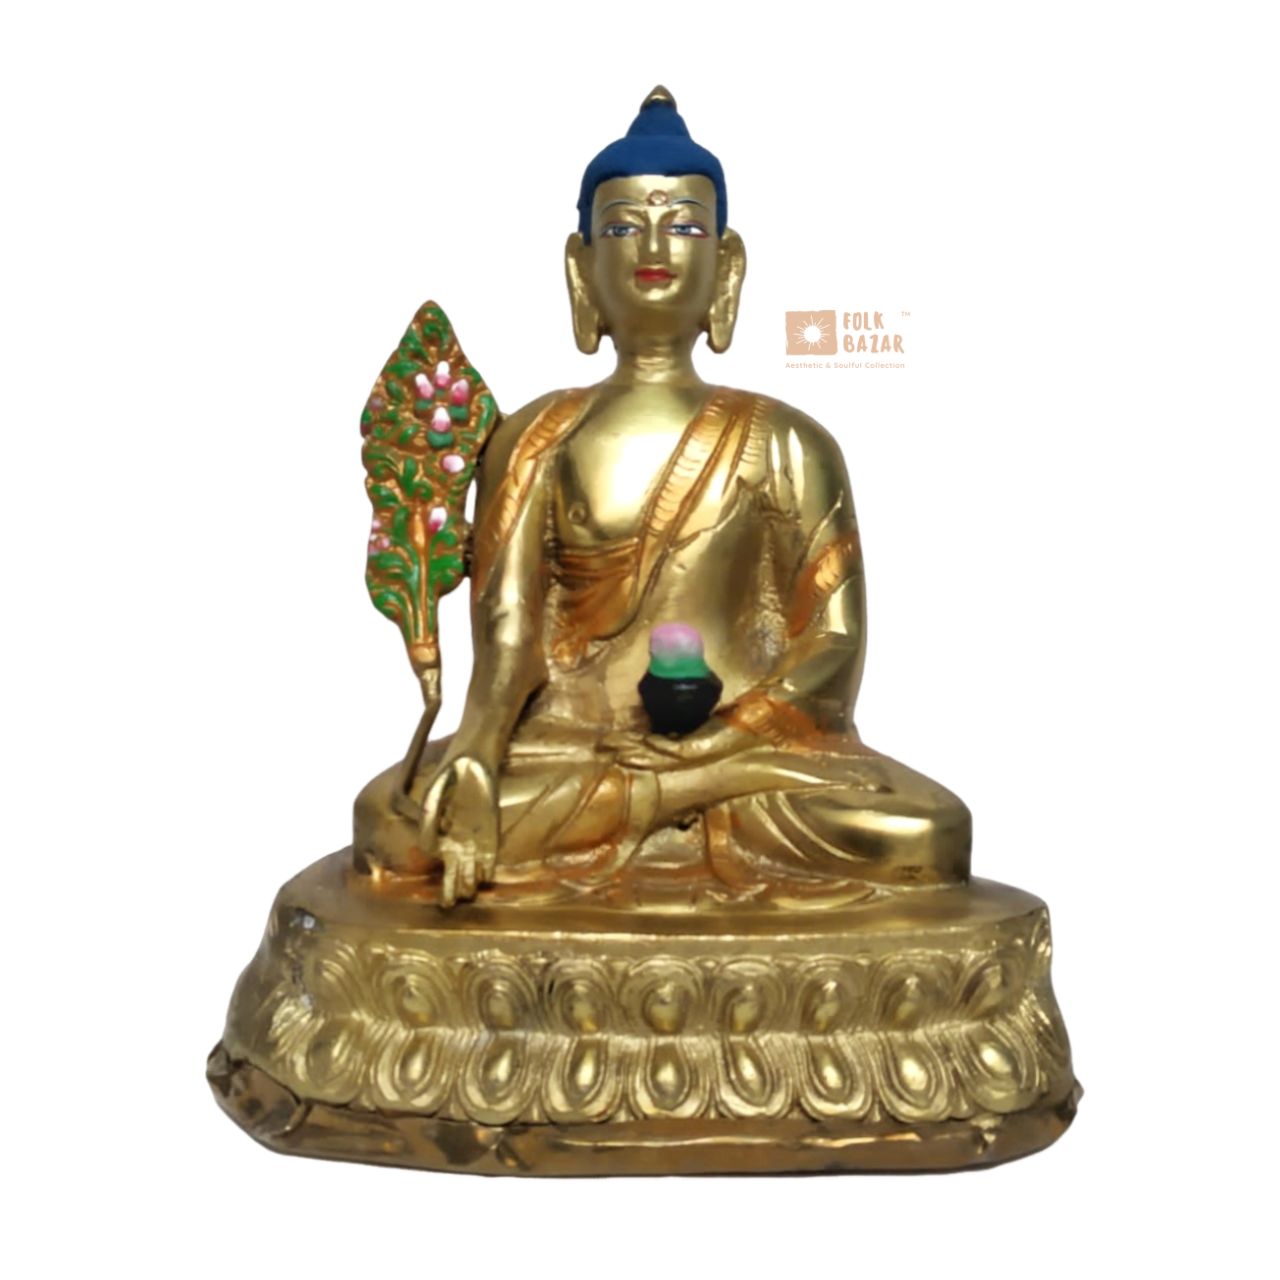 Menlha (Medicine) Buddha Statue